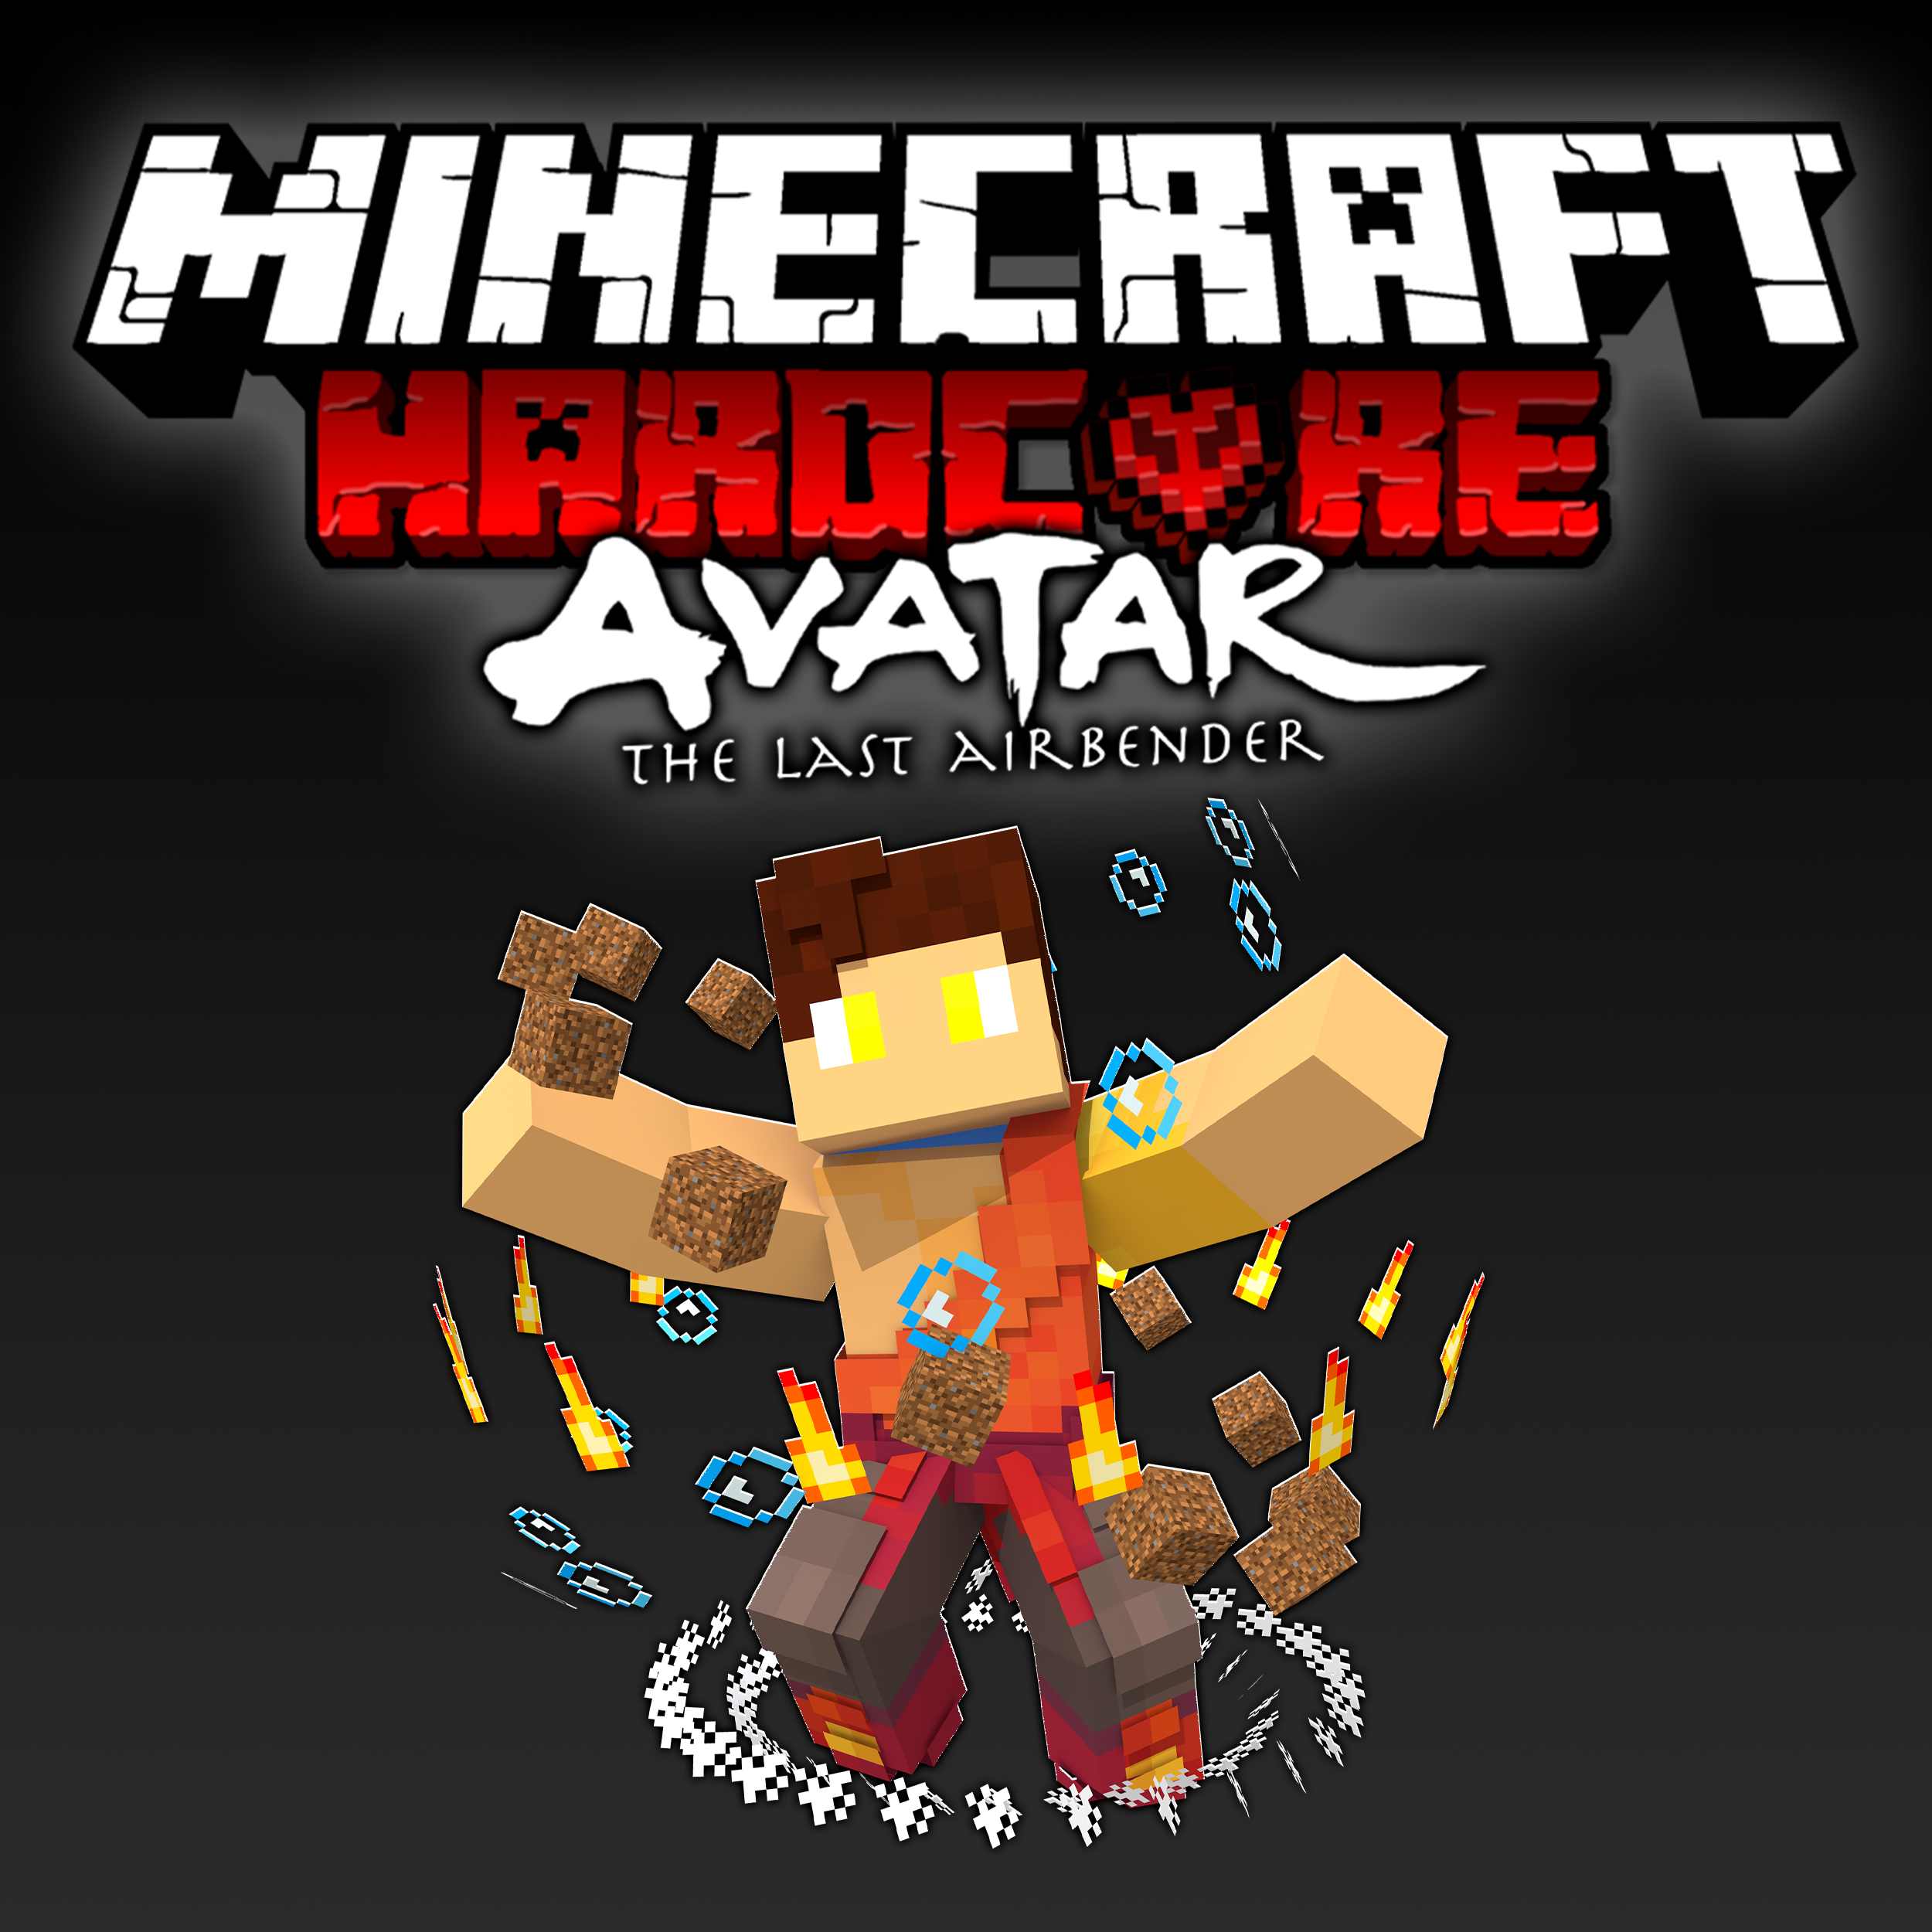 3 best Minecraft servers for Avatar